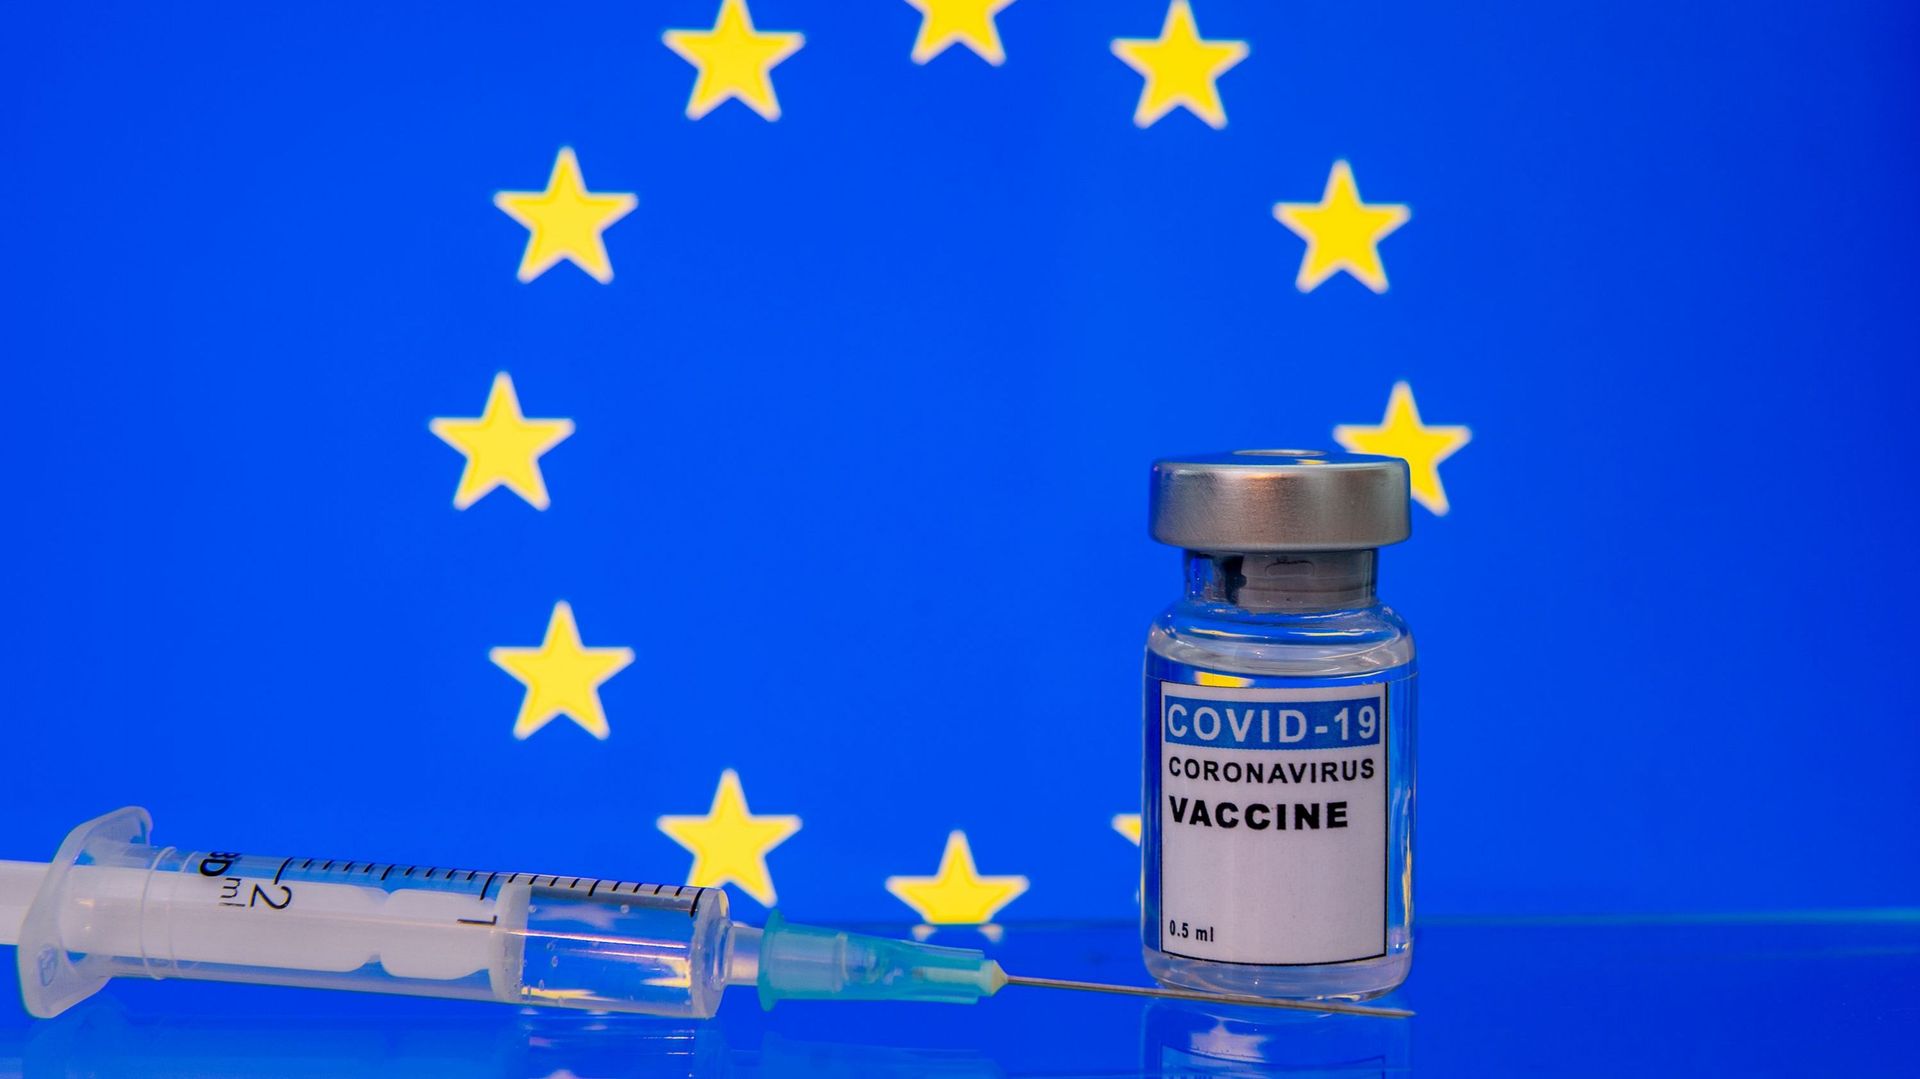 EU ready for Coronavirus vaccine. COVID-19 pandemic theme